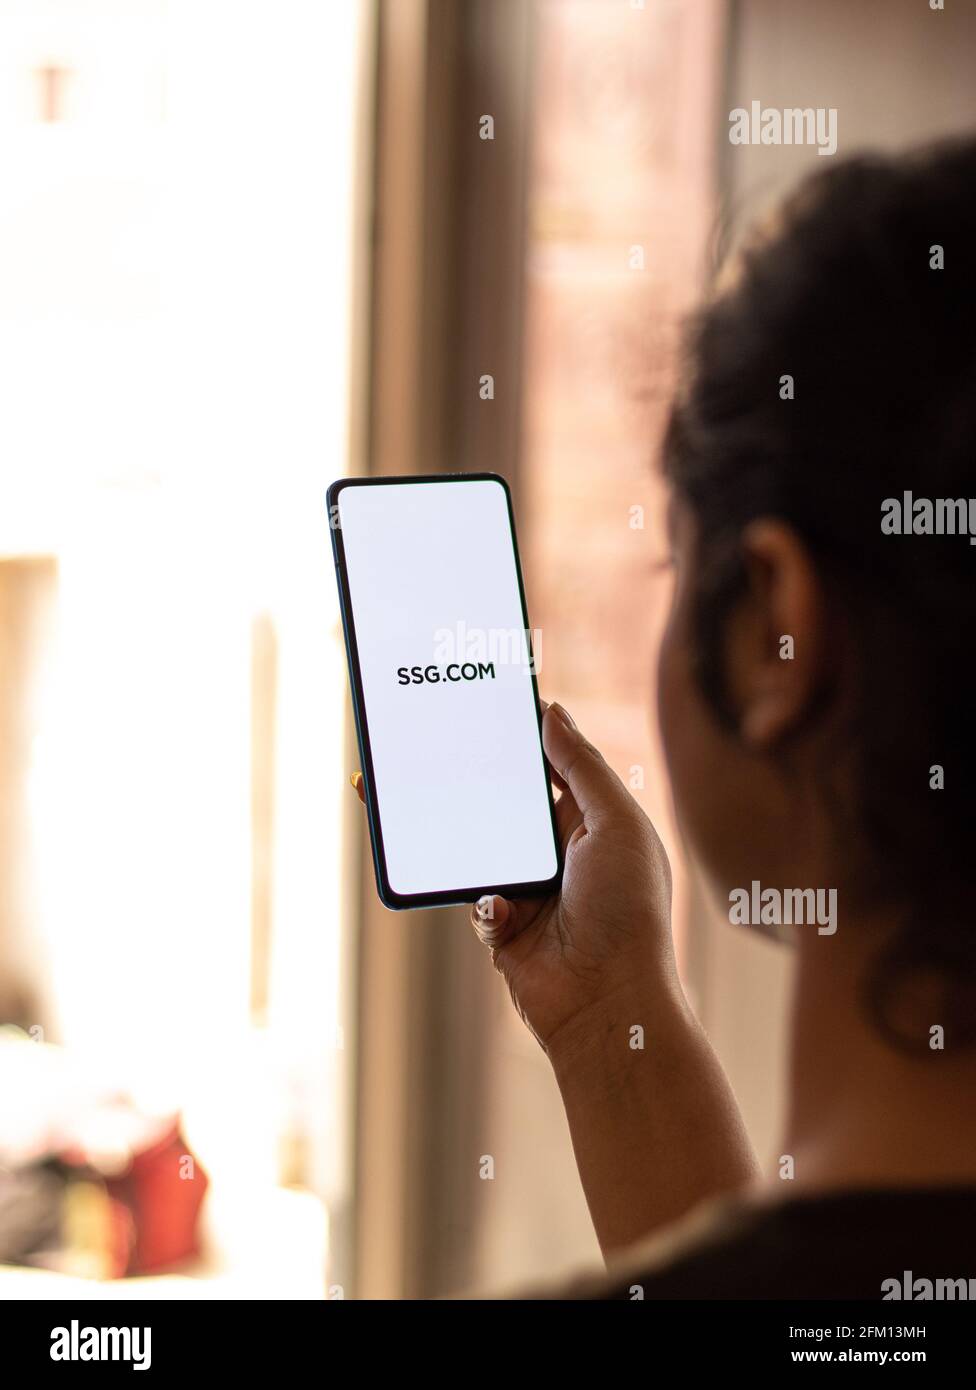 Assam, india - May 04, 2021 : SSG.COM logo on phone screen stock image. Stock Photo